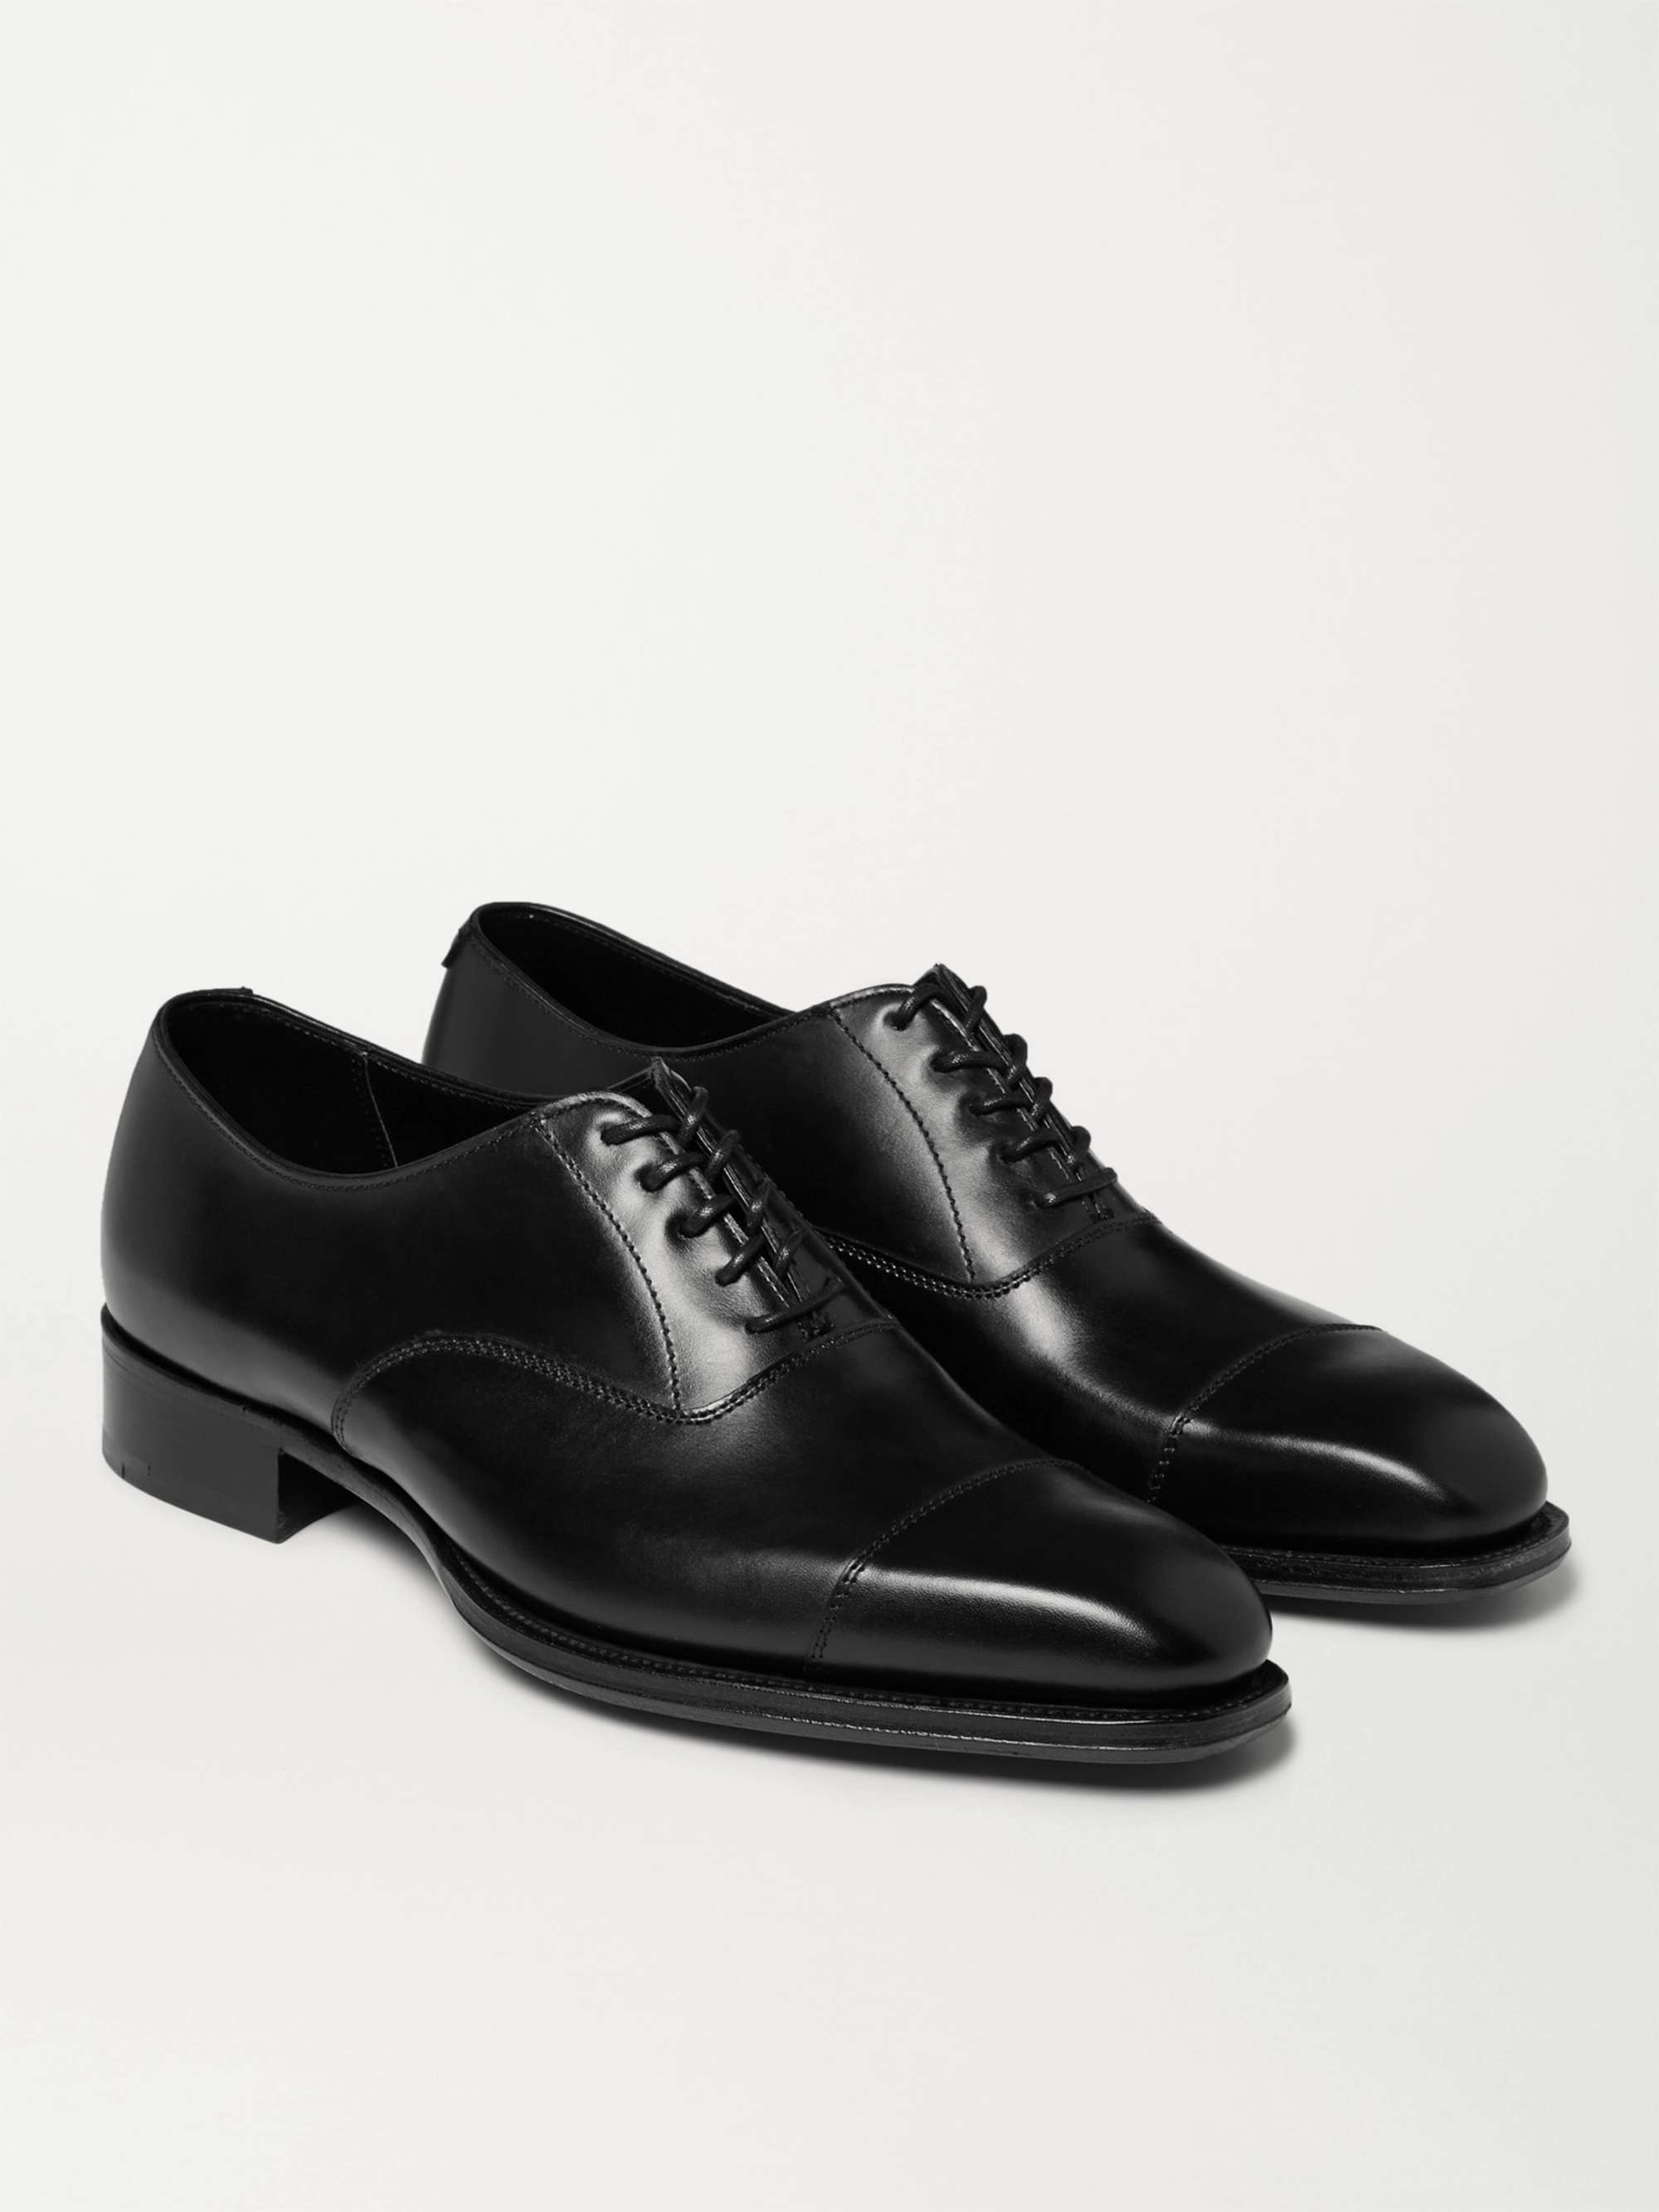 KINGSMAN + George Cleverley Leather Oxford Shoes for Men | MR PORTER